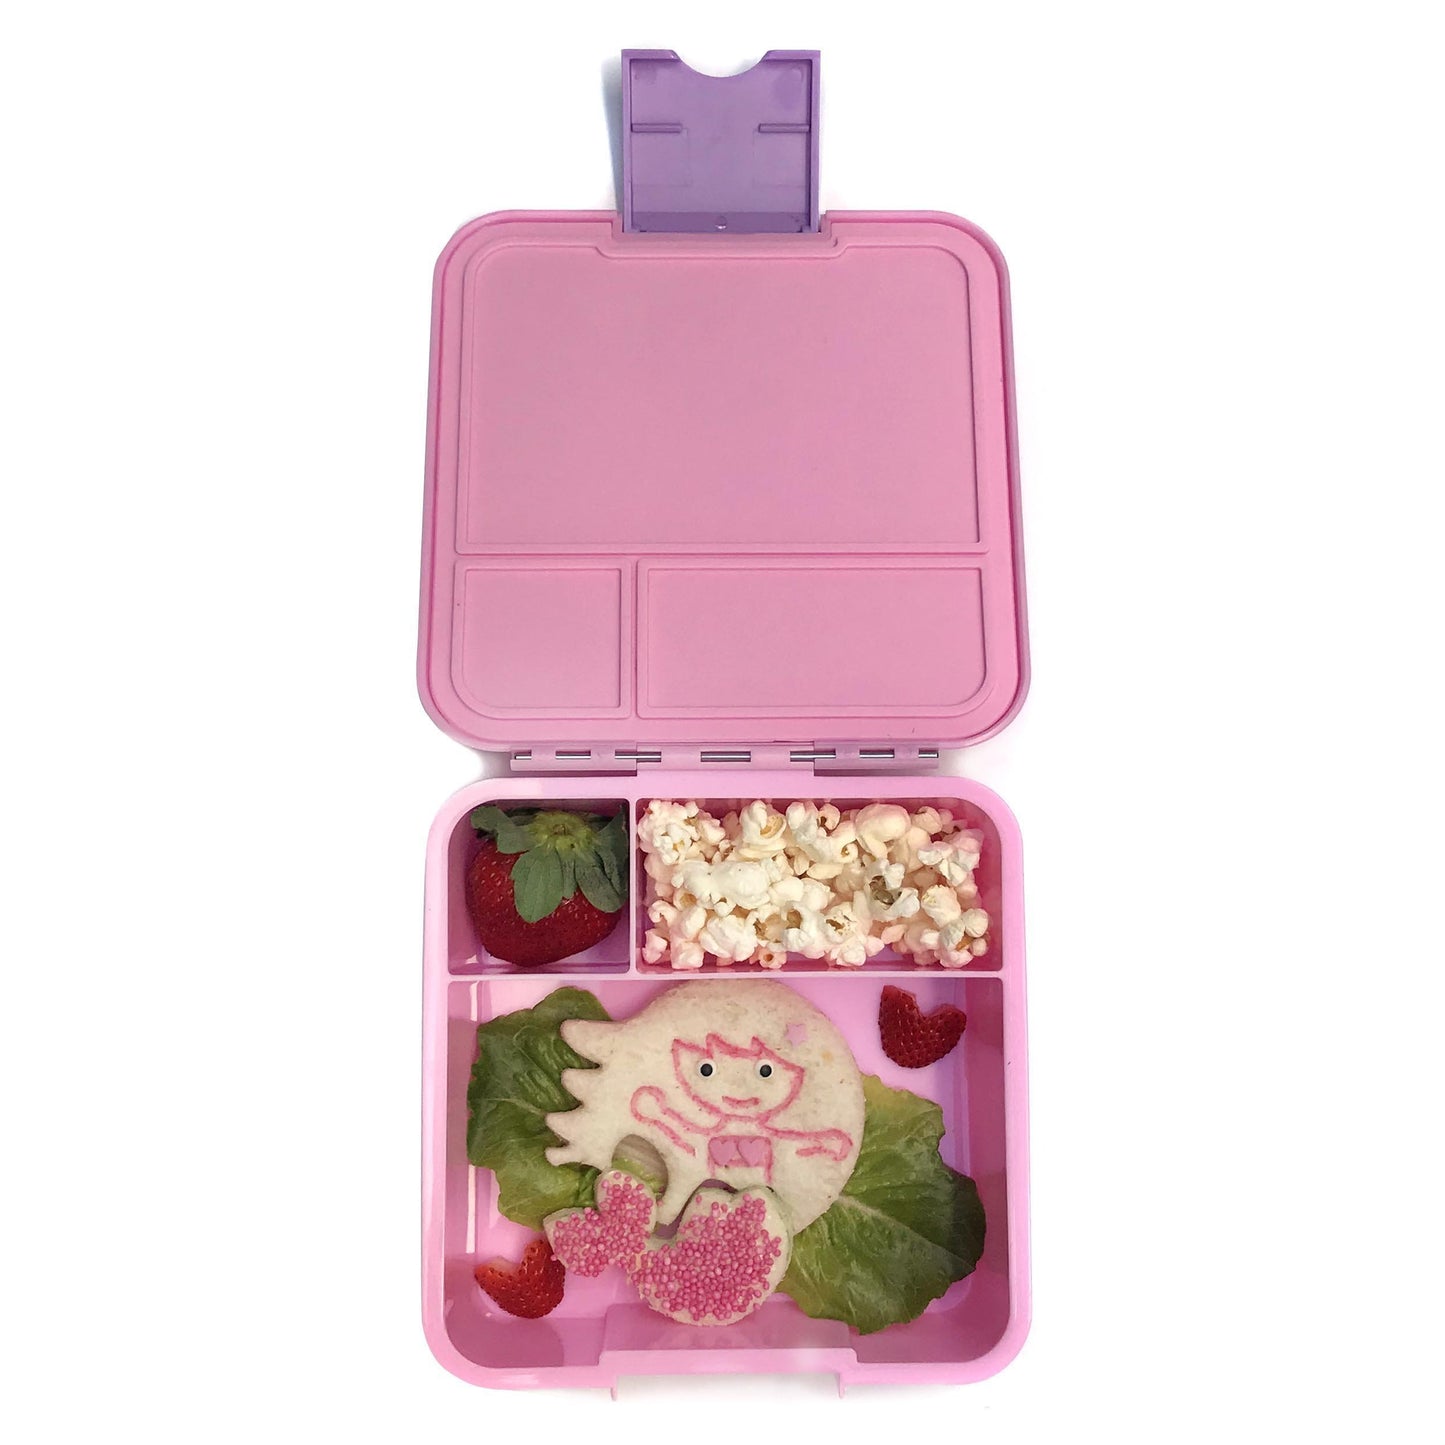 Little Lunch Box Co. Bento Three Mermaid Pre-Order